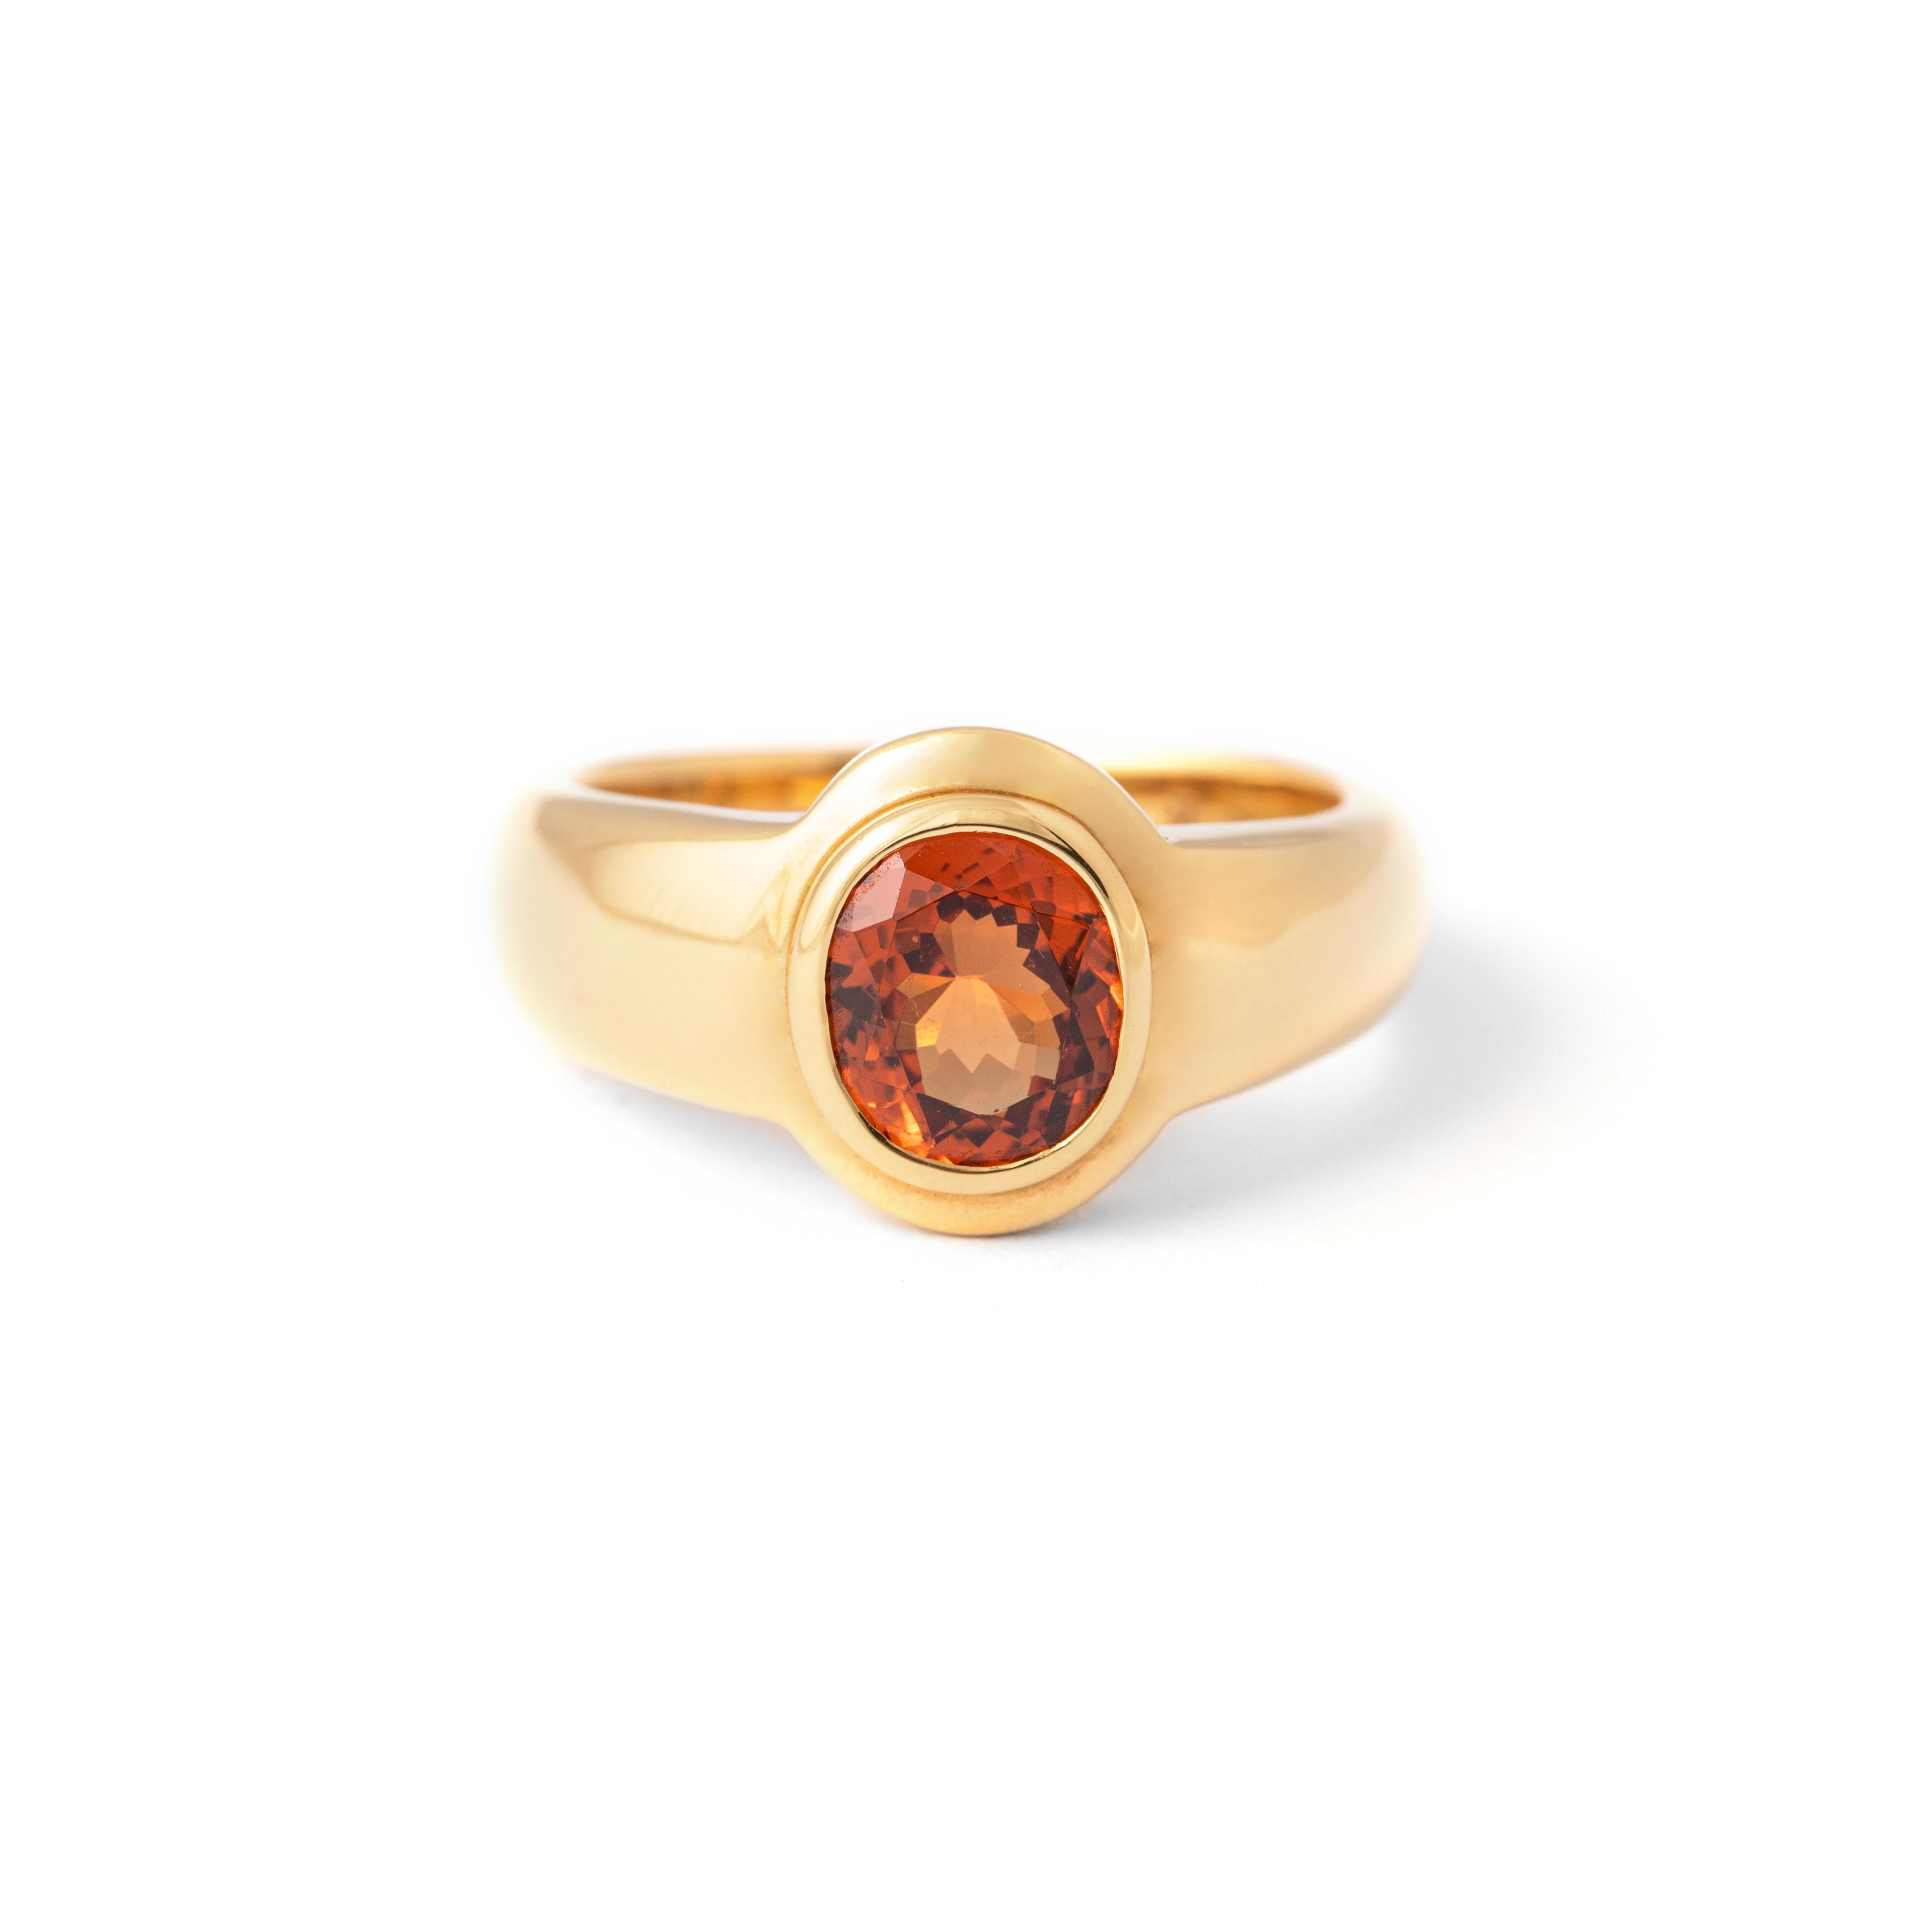 Garnet on Yellow Gold 18K Ring.
Centered by an oval cut Garnet of 1.69 carat.

Size: 6.5
Total gross weight: 8.74 grams
